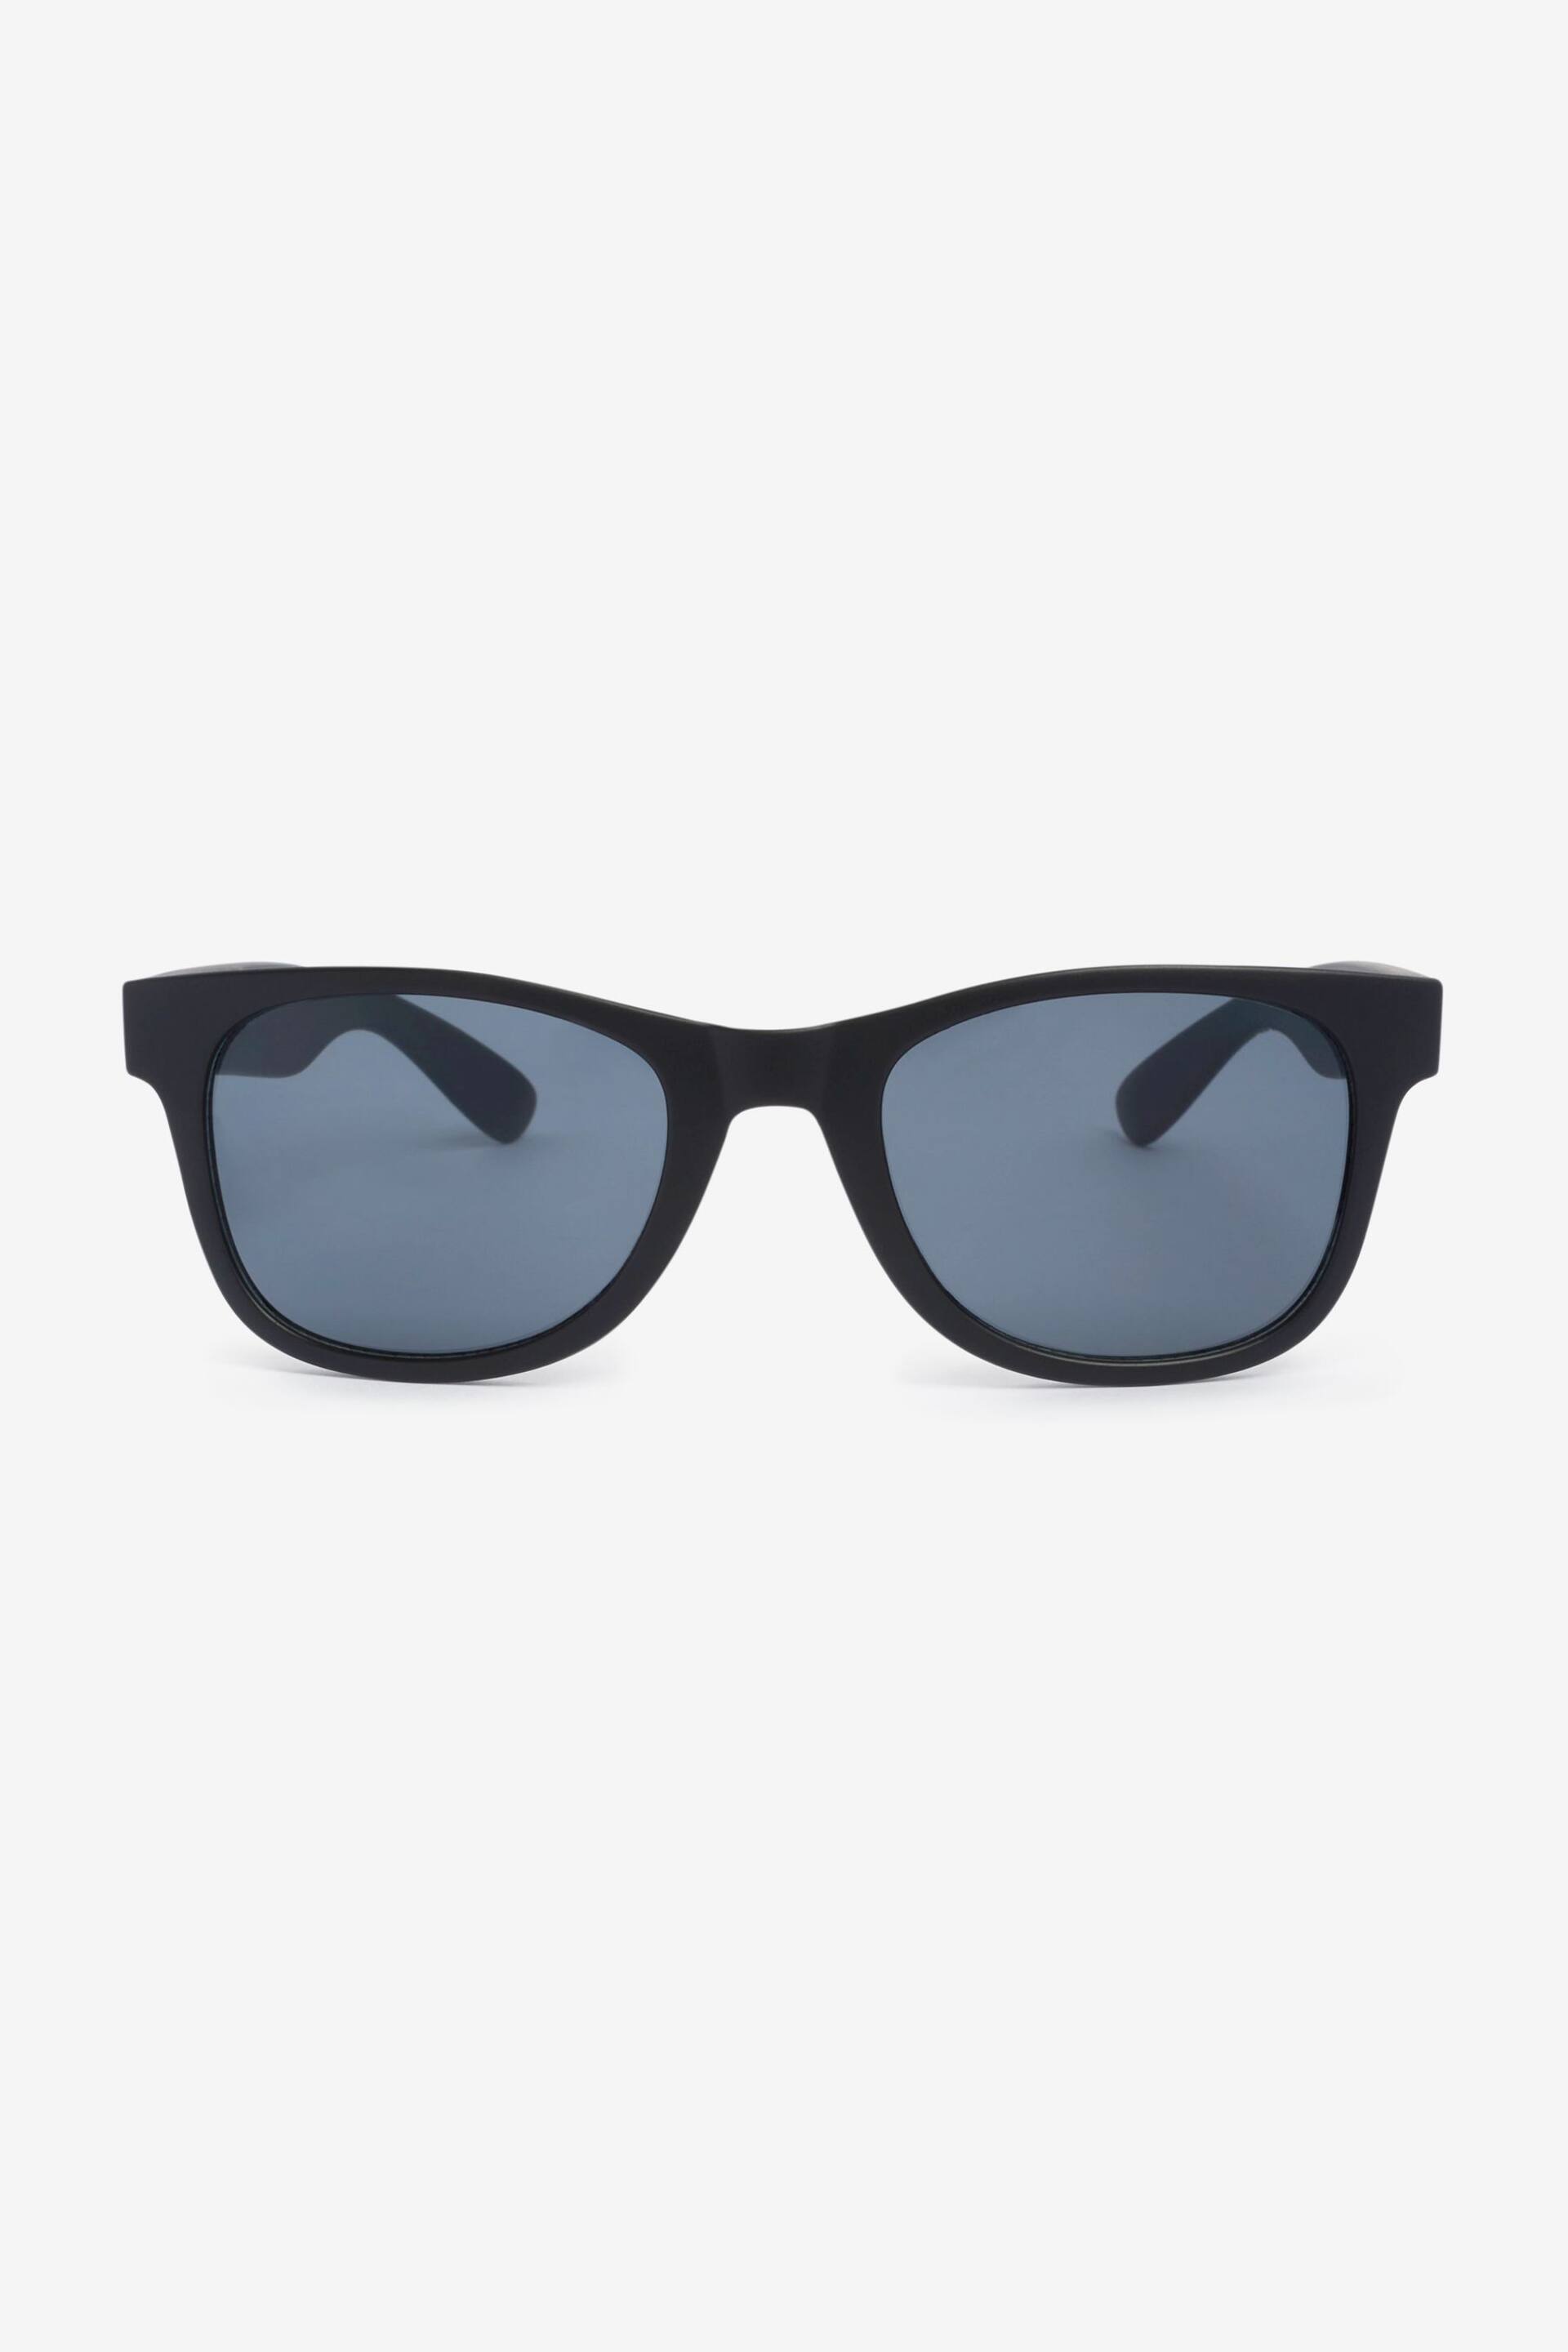 Black Preppy Sunglasses - Image 2 of 4